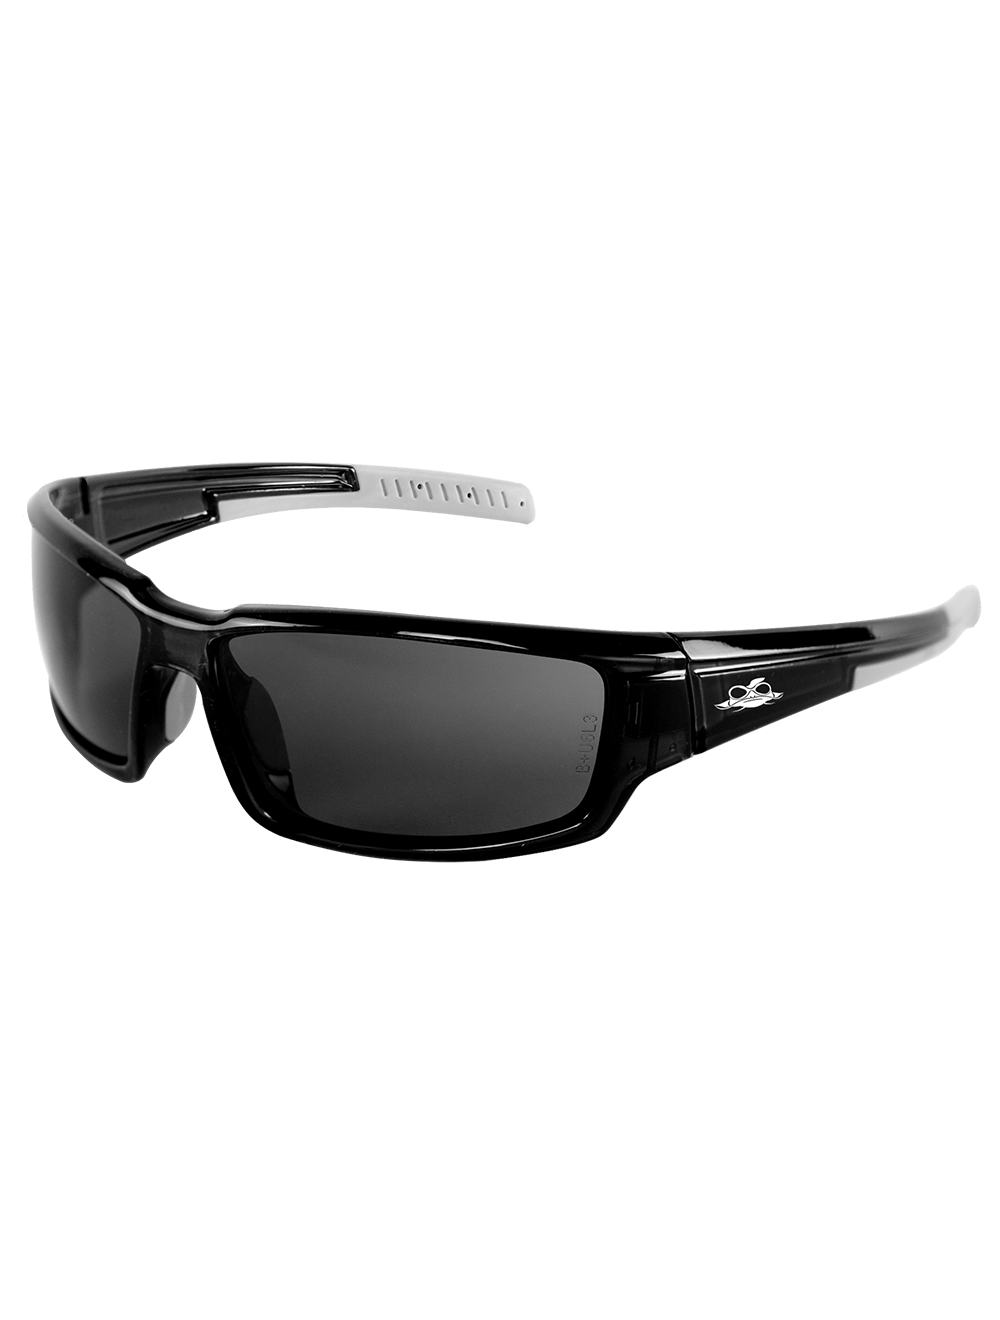 Maki® Smoke Performance Fog Technology Lens, Crystal Black Frame Safety Glasses - BH1433PFT